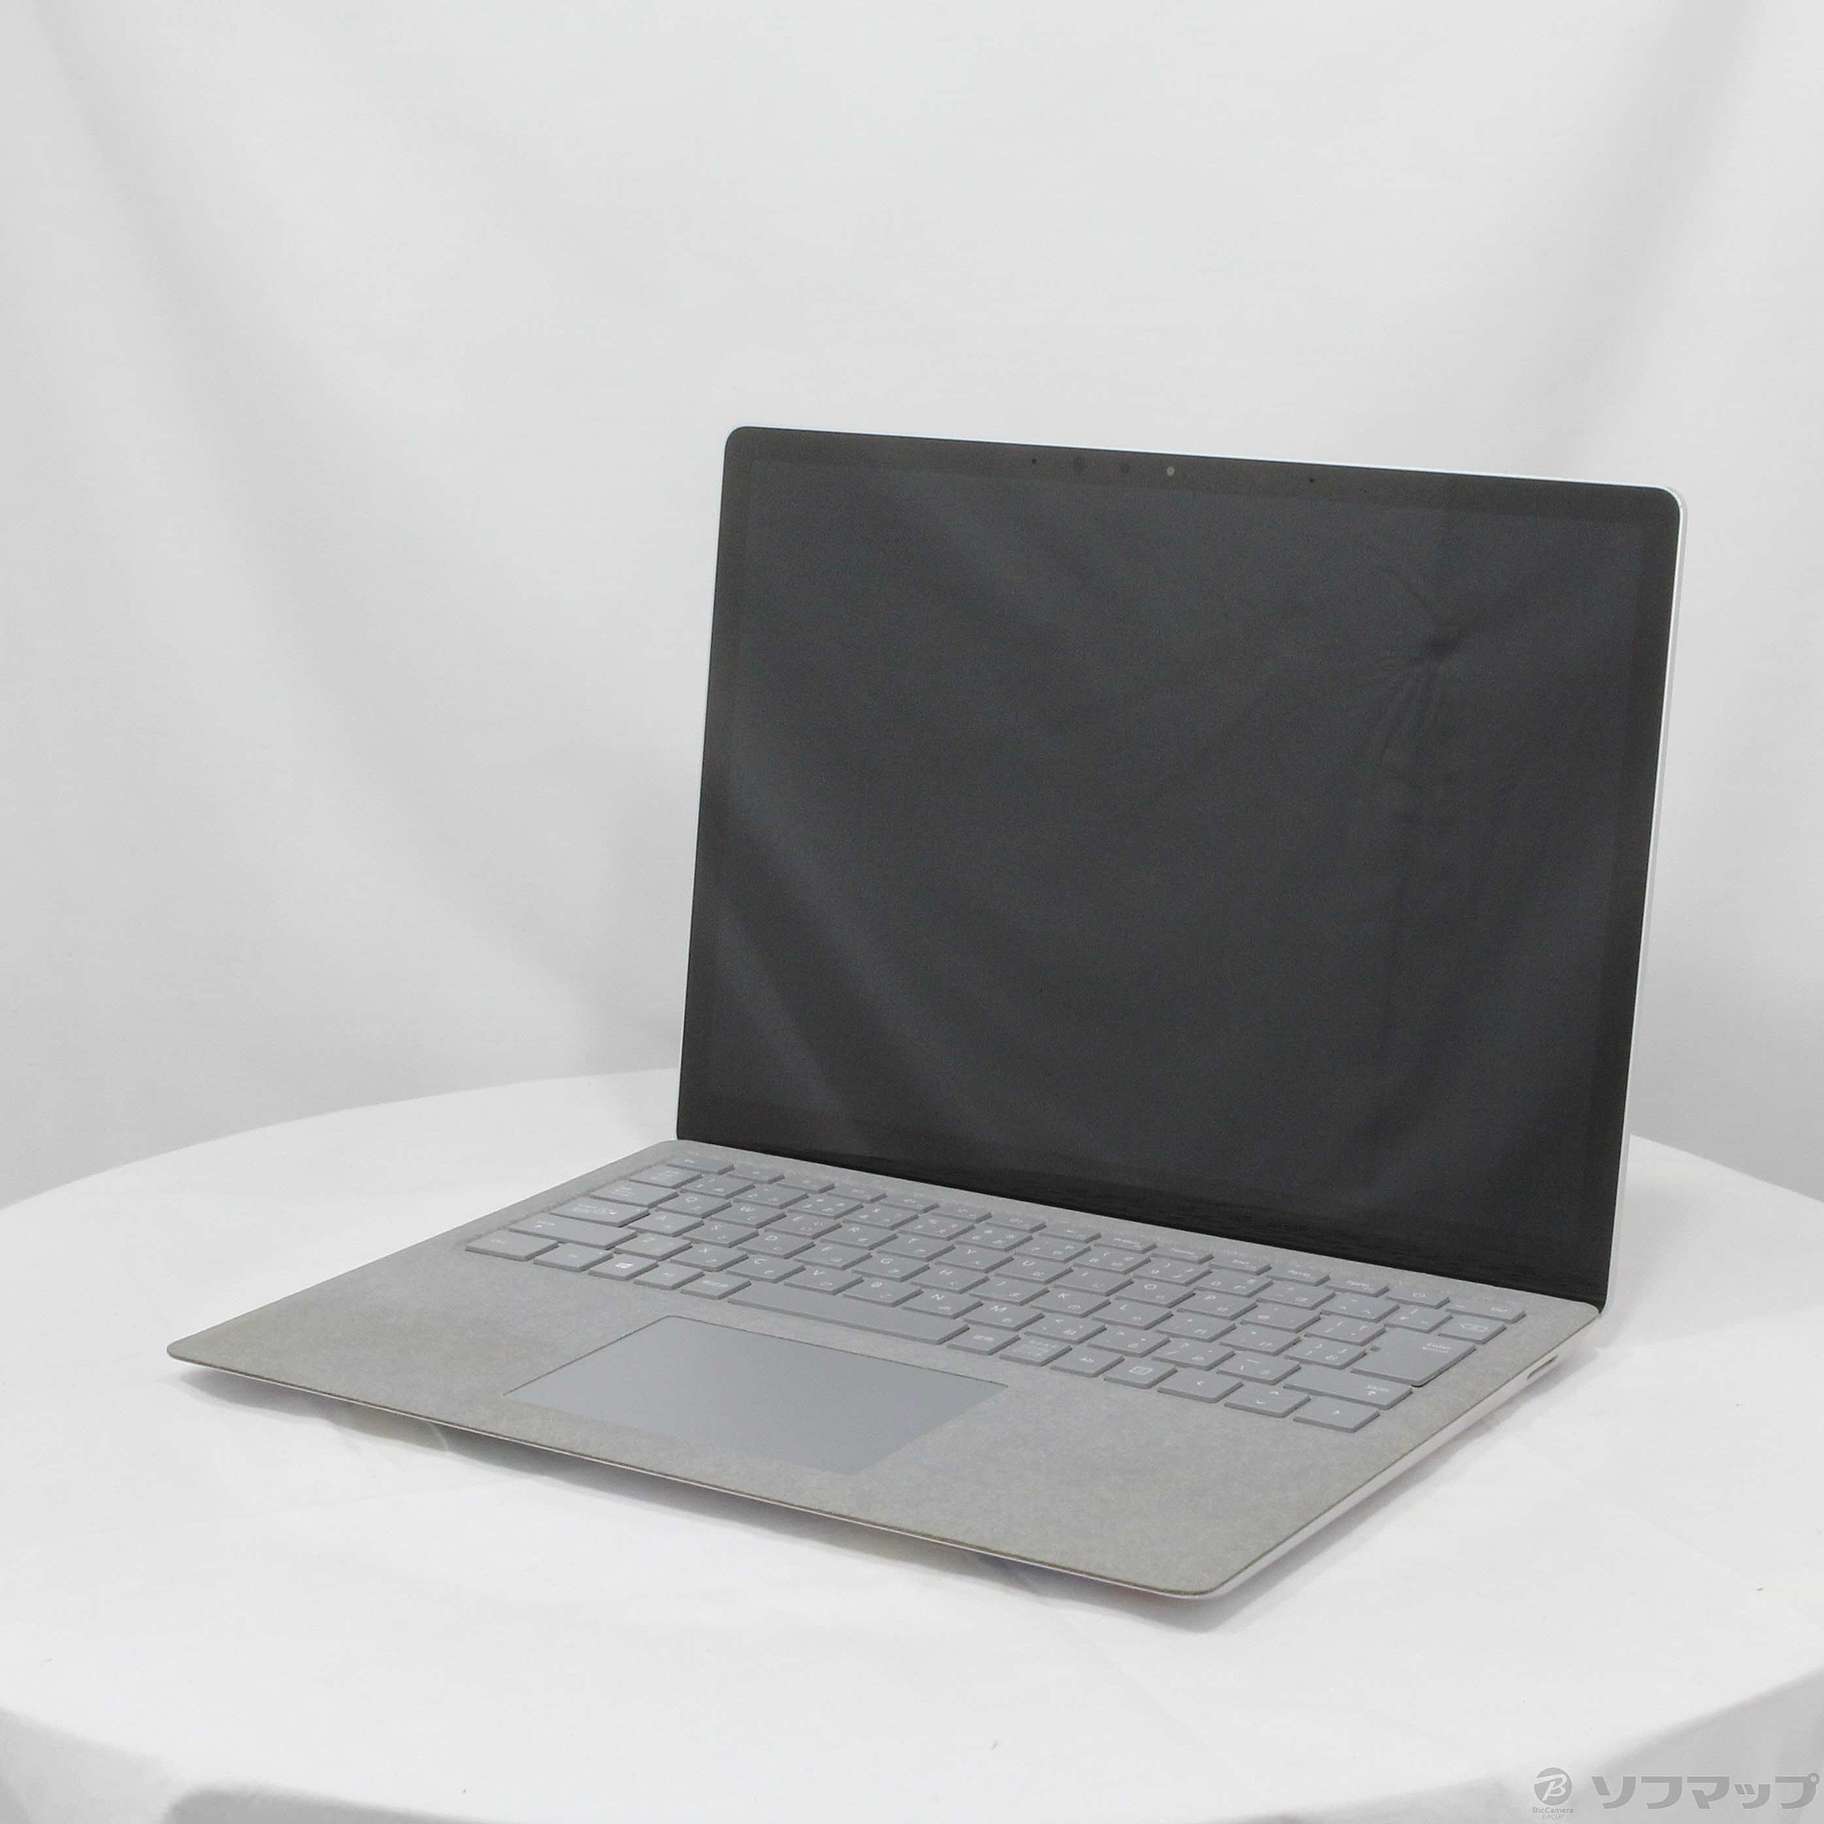 Microsoft Surface Laptop DAG-00106 | www.fleettracktz.com